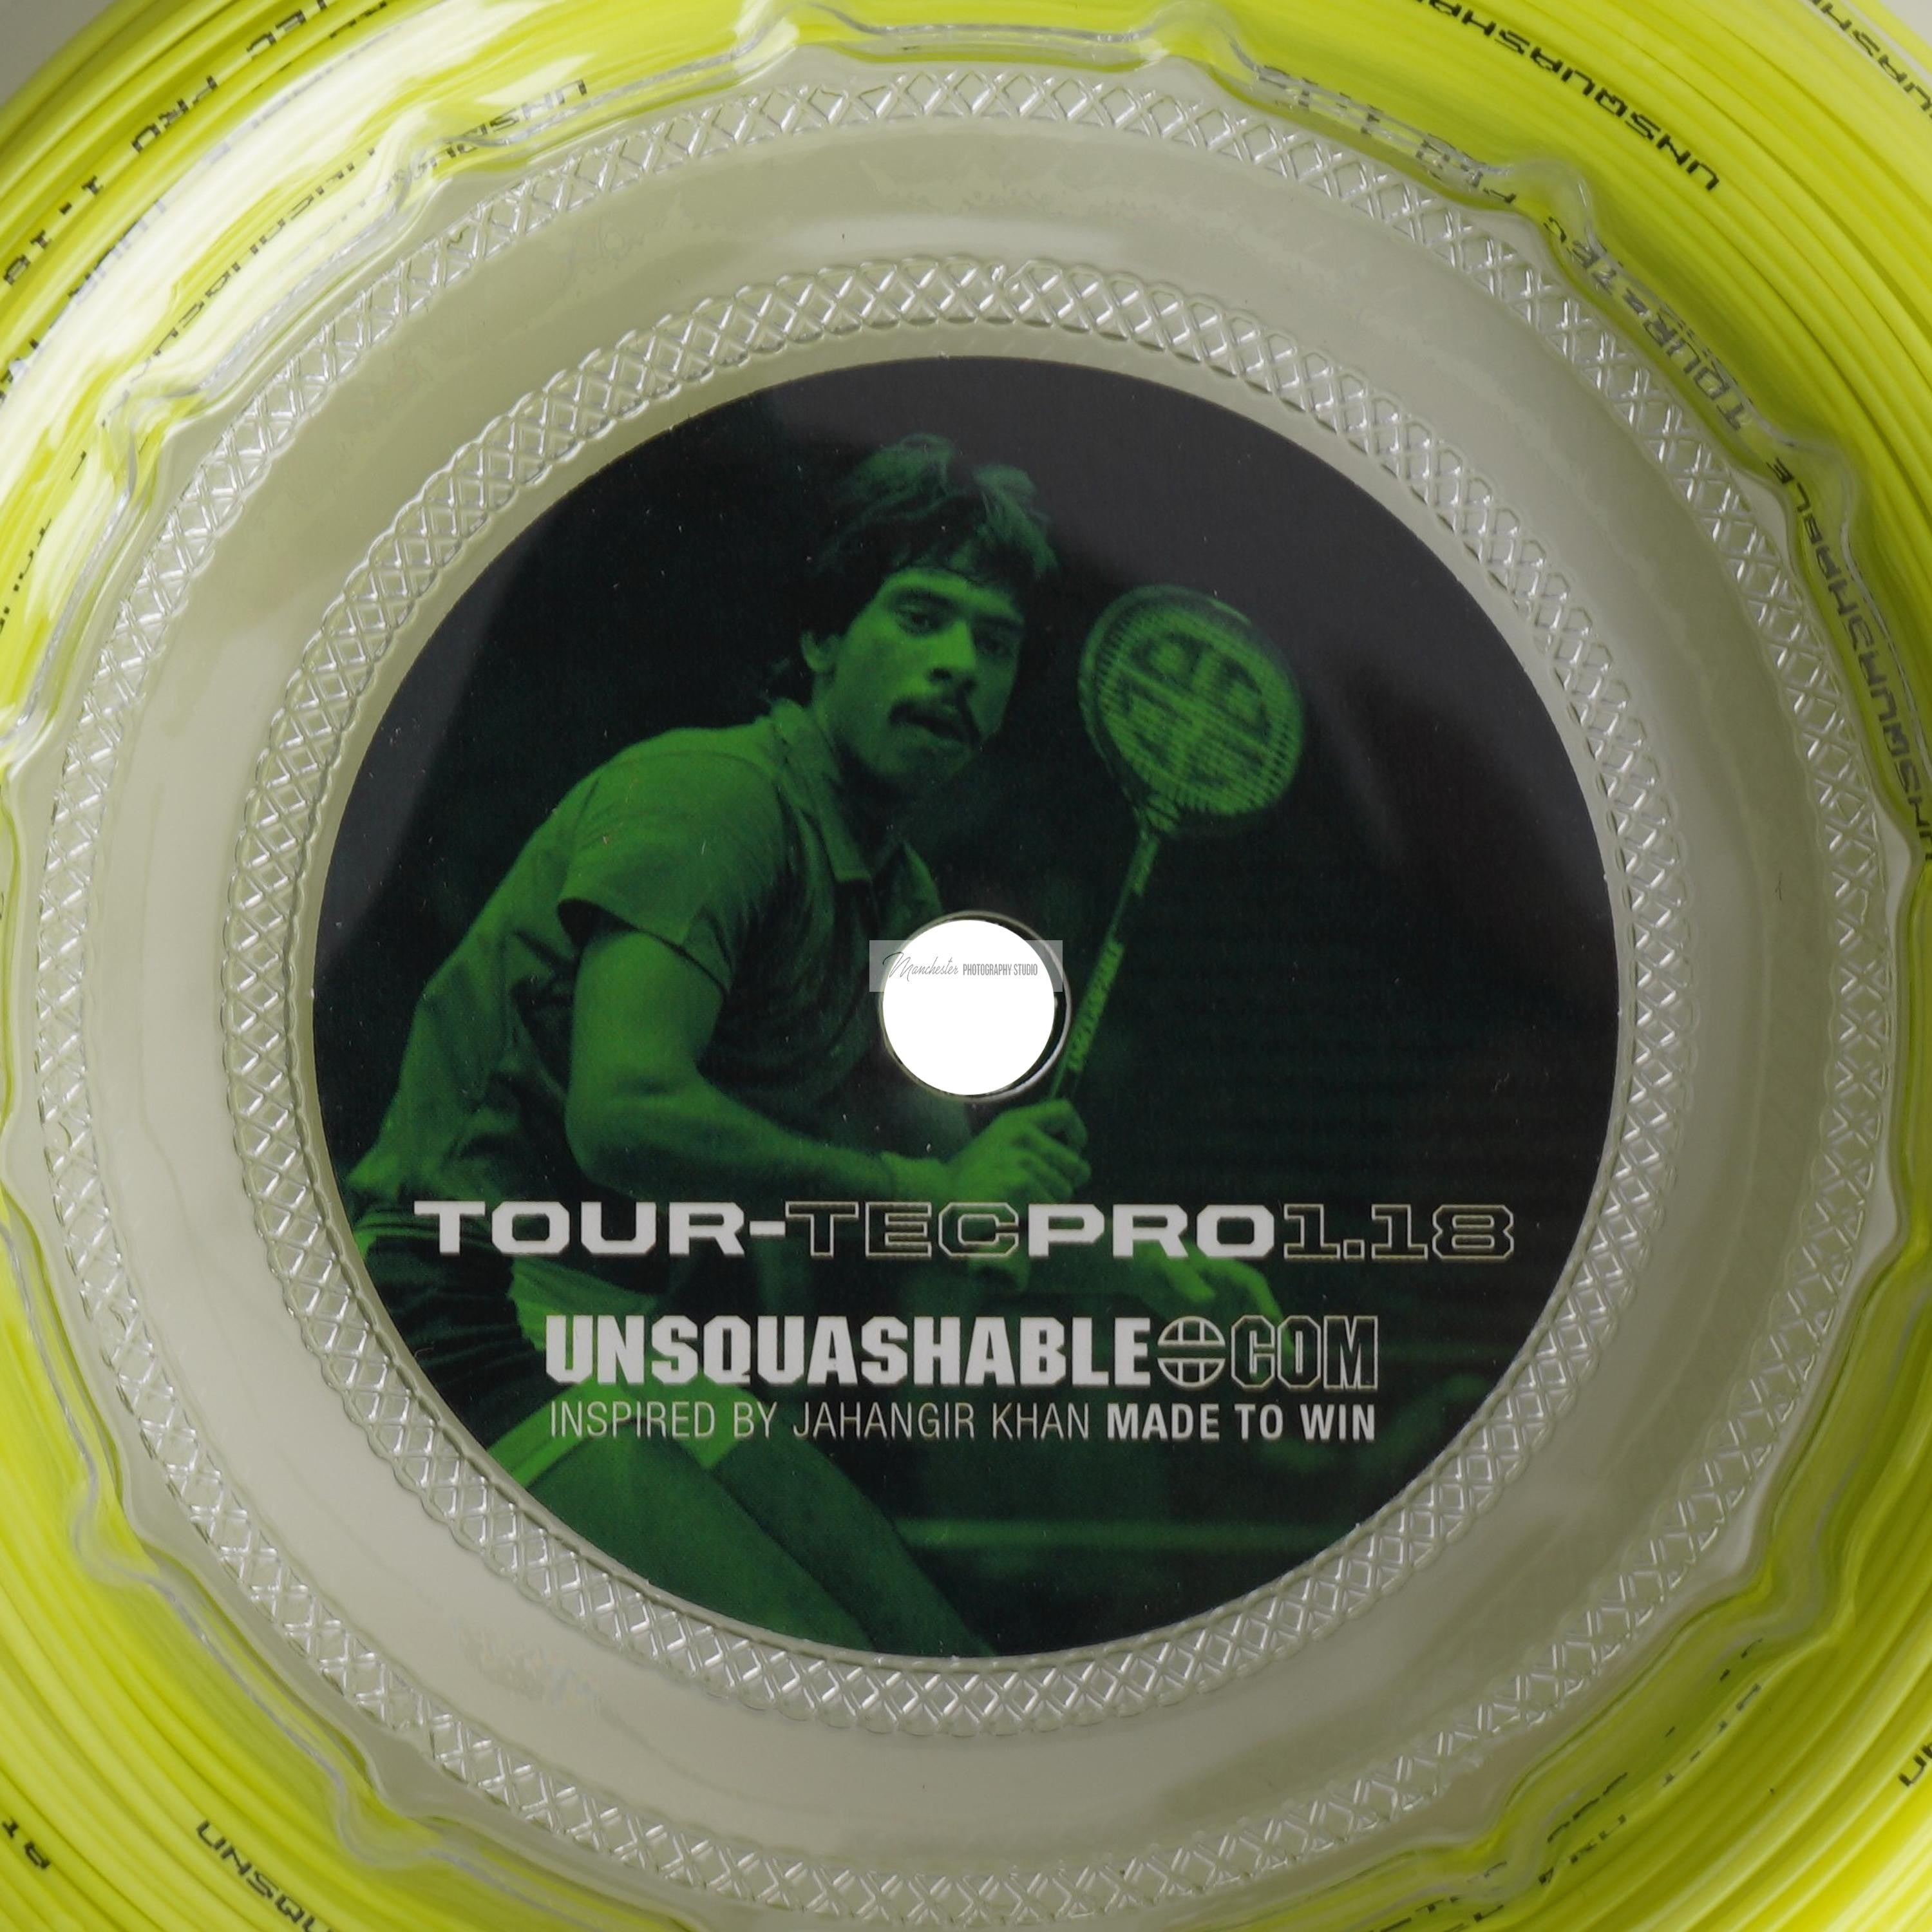 UNSQUASHABLE Tour-Tec Pro 1.18 (Neon Yellow) 100 M Reel - Squash Strings